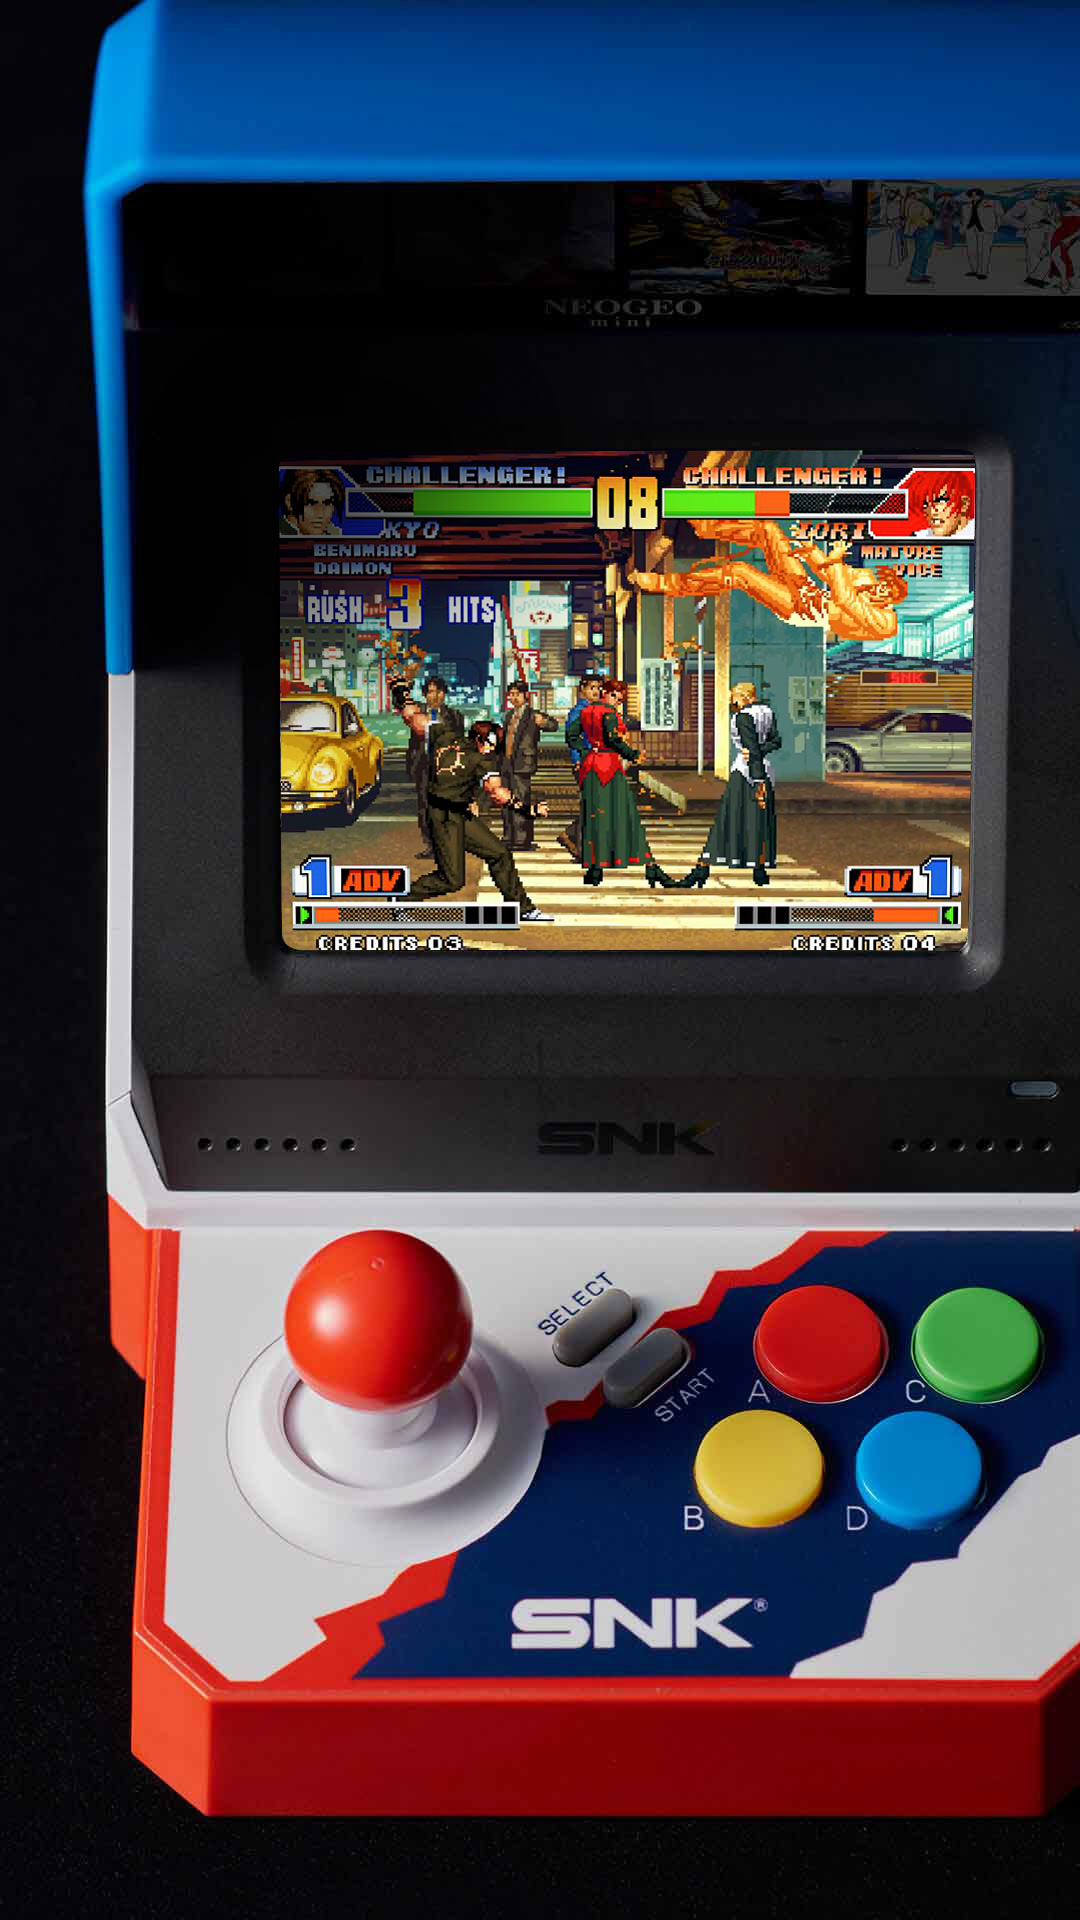  NEOGEO mini Japan Game Console SNK neo geo Japanese : Video  Games